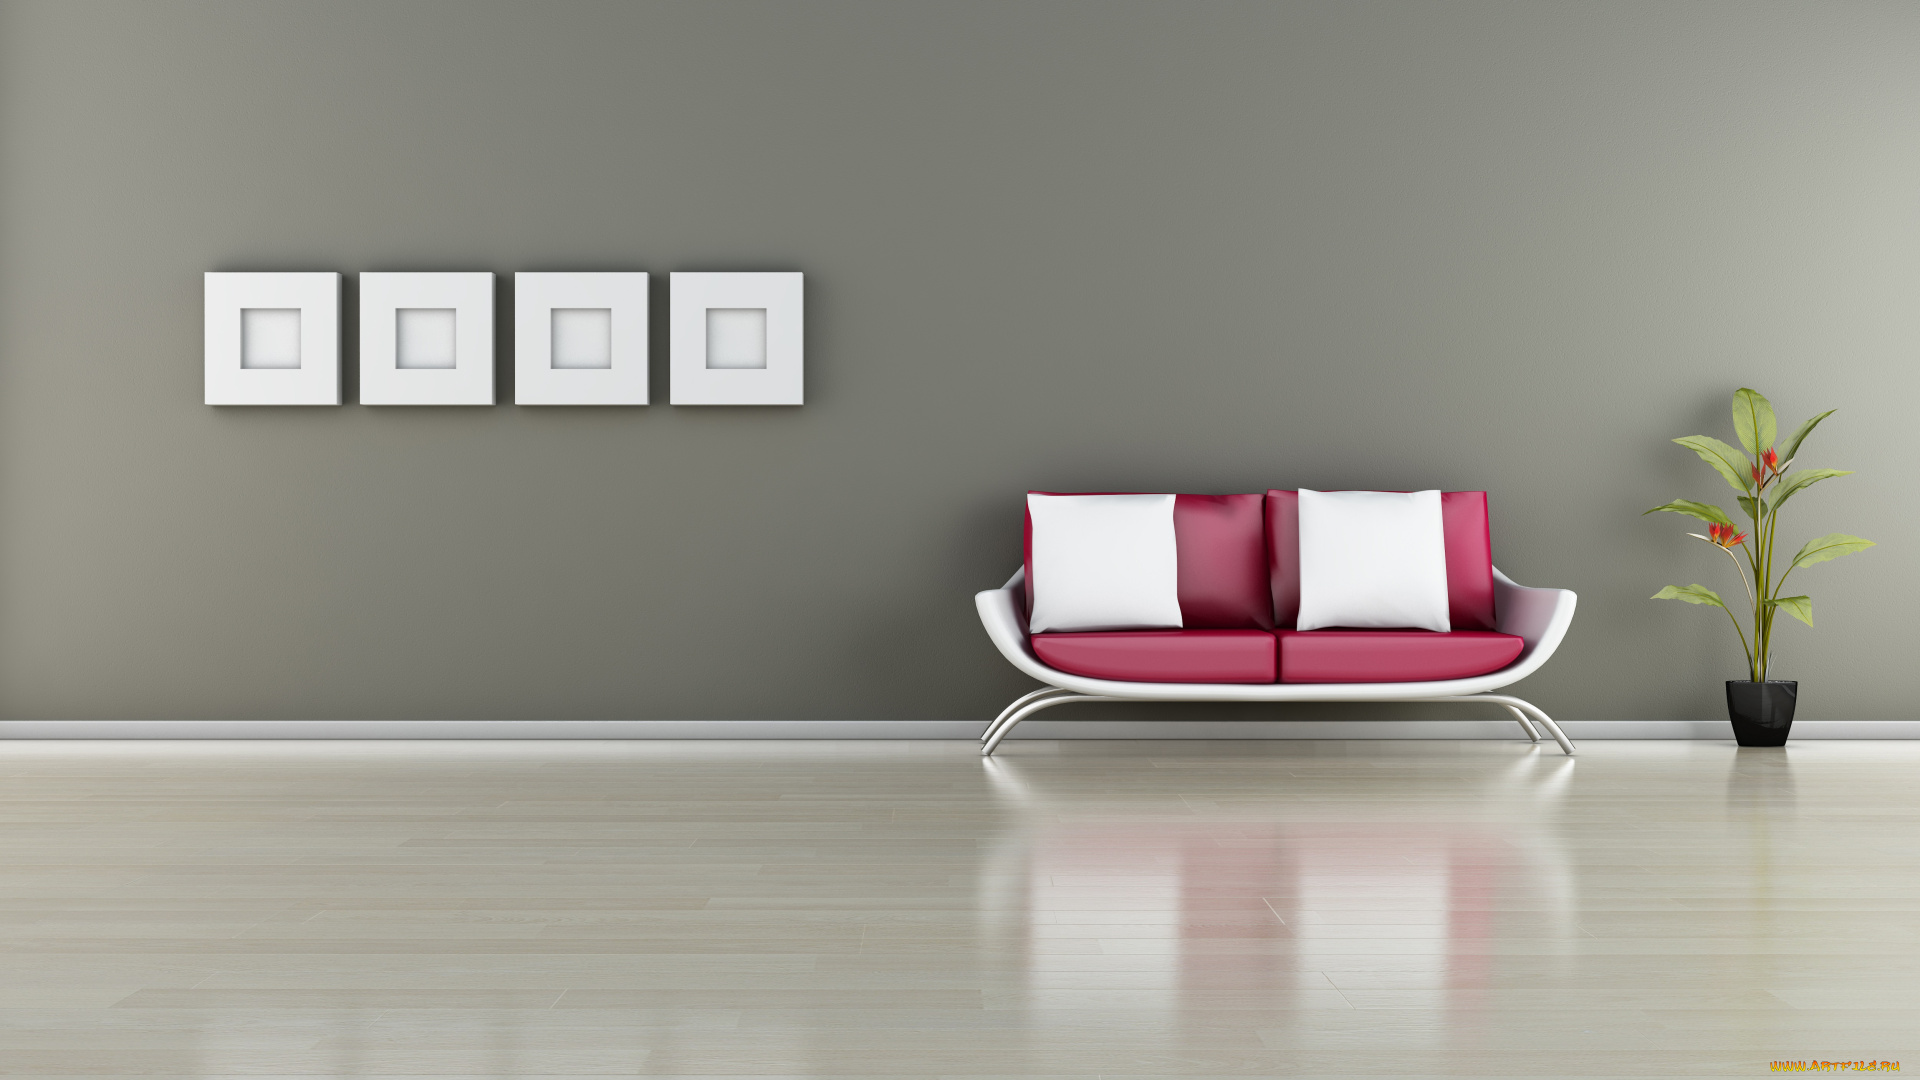 3д, графика, realism, реализм, интерьер, диван, стена